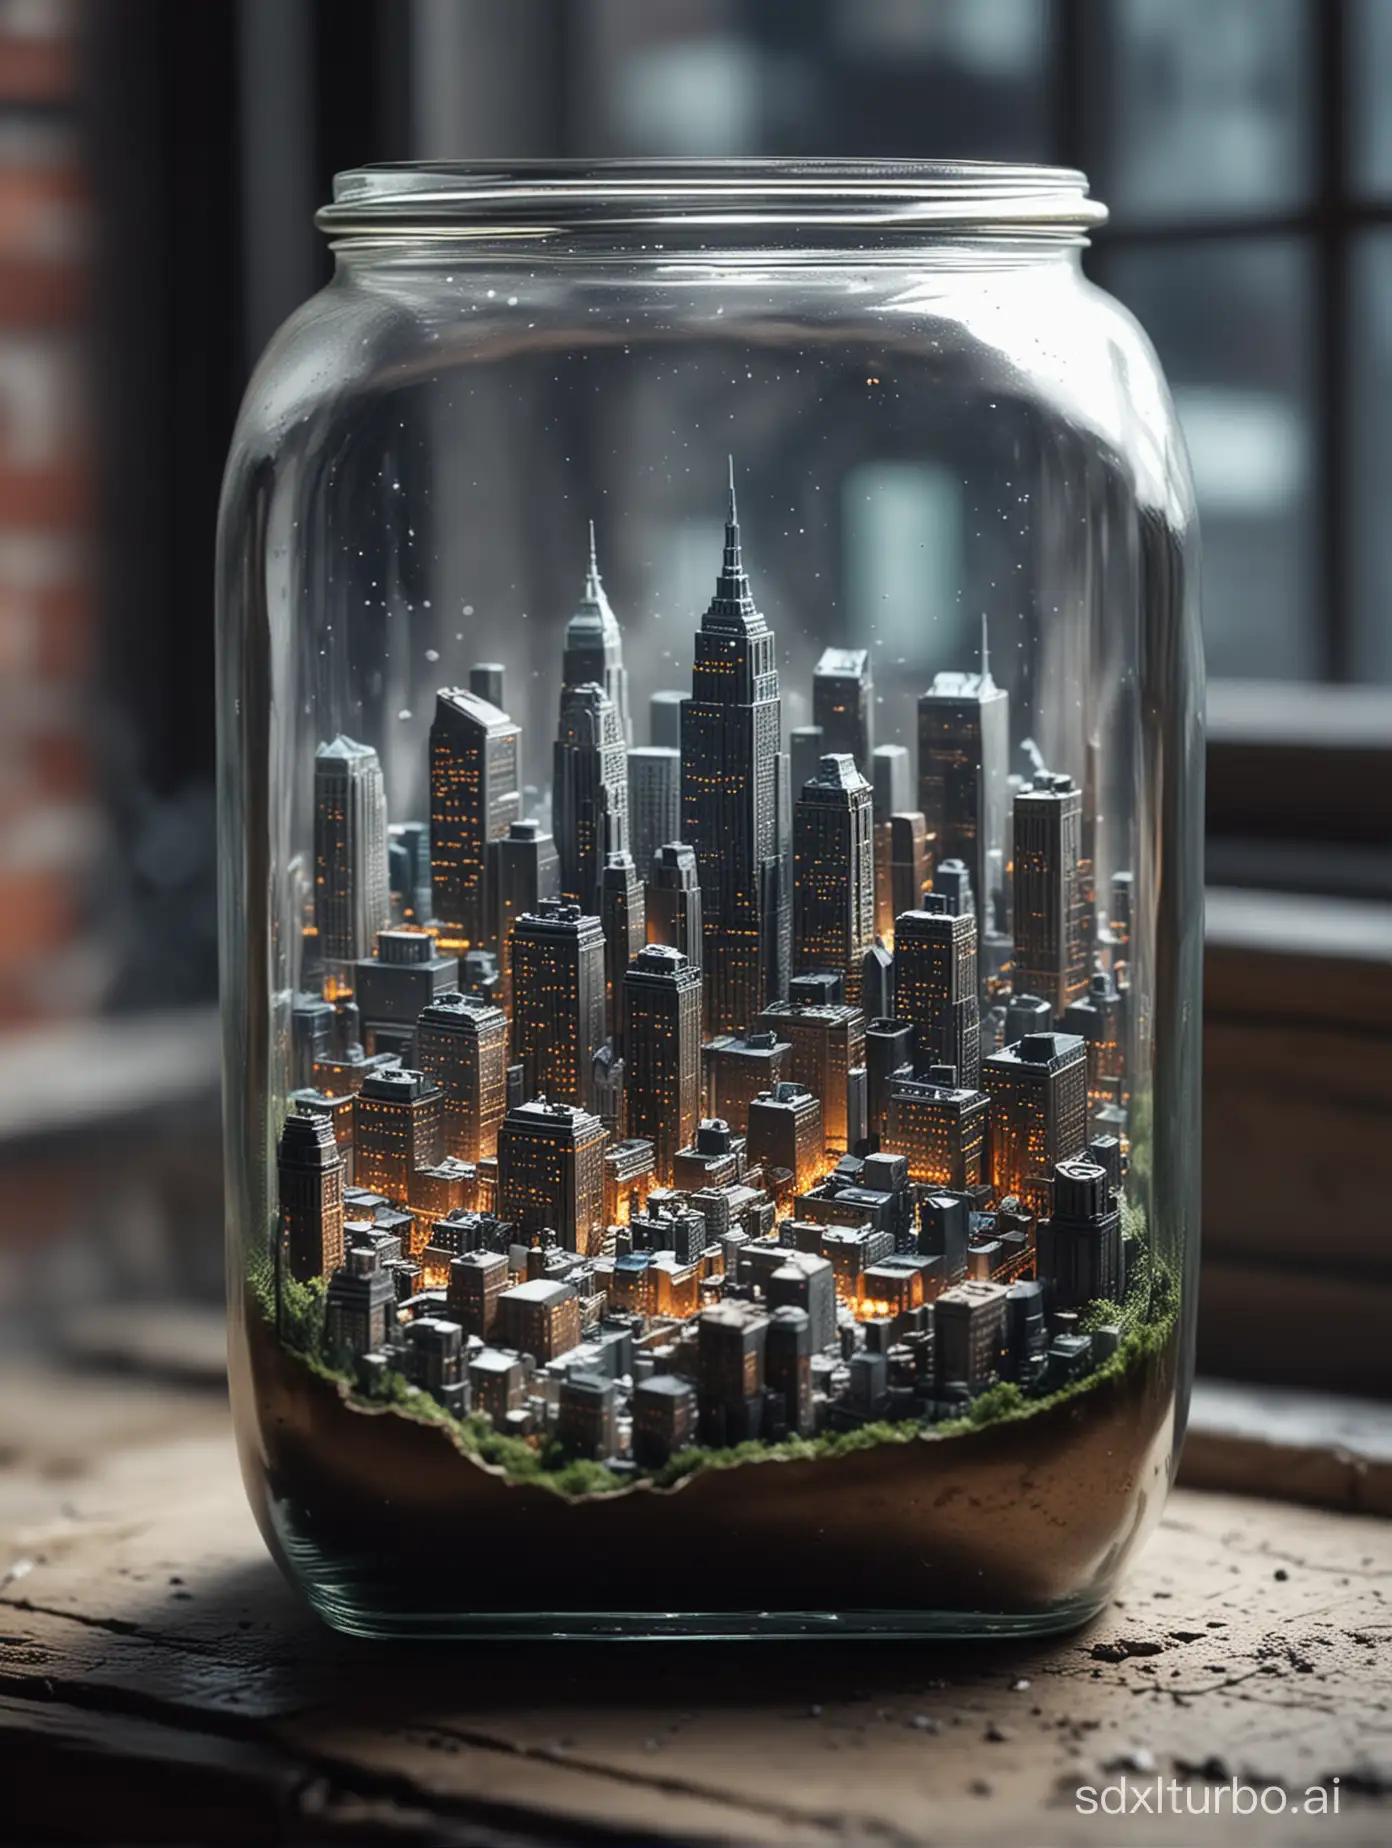 Apocalyptic-Punk-City-Encased-in-Glass-Jar-on-Windowsill